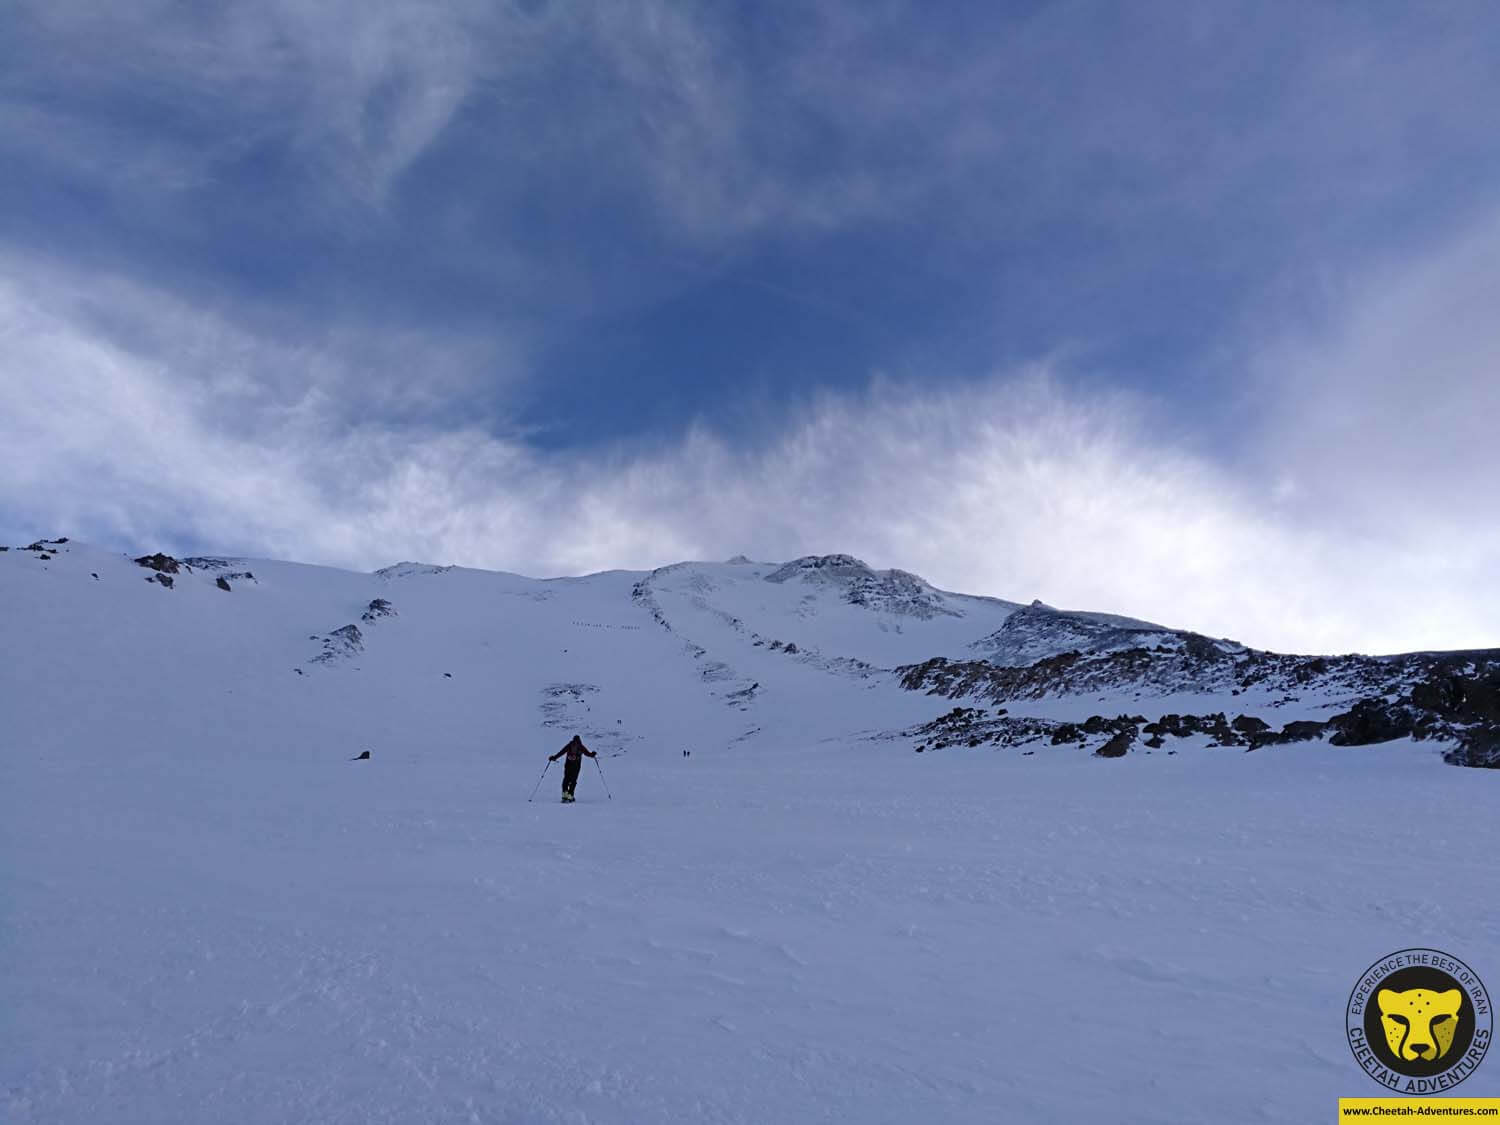 6-1 Damavand Summit Day, Ski touring from Bargah-e Sevom Hut